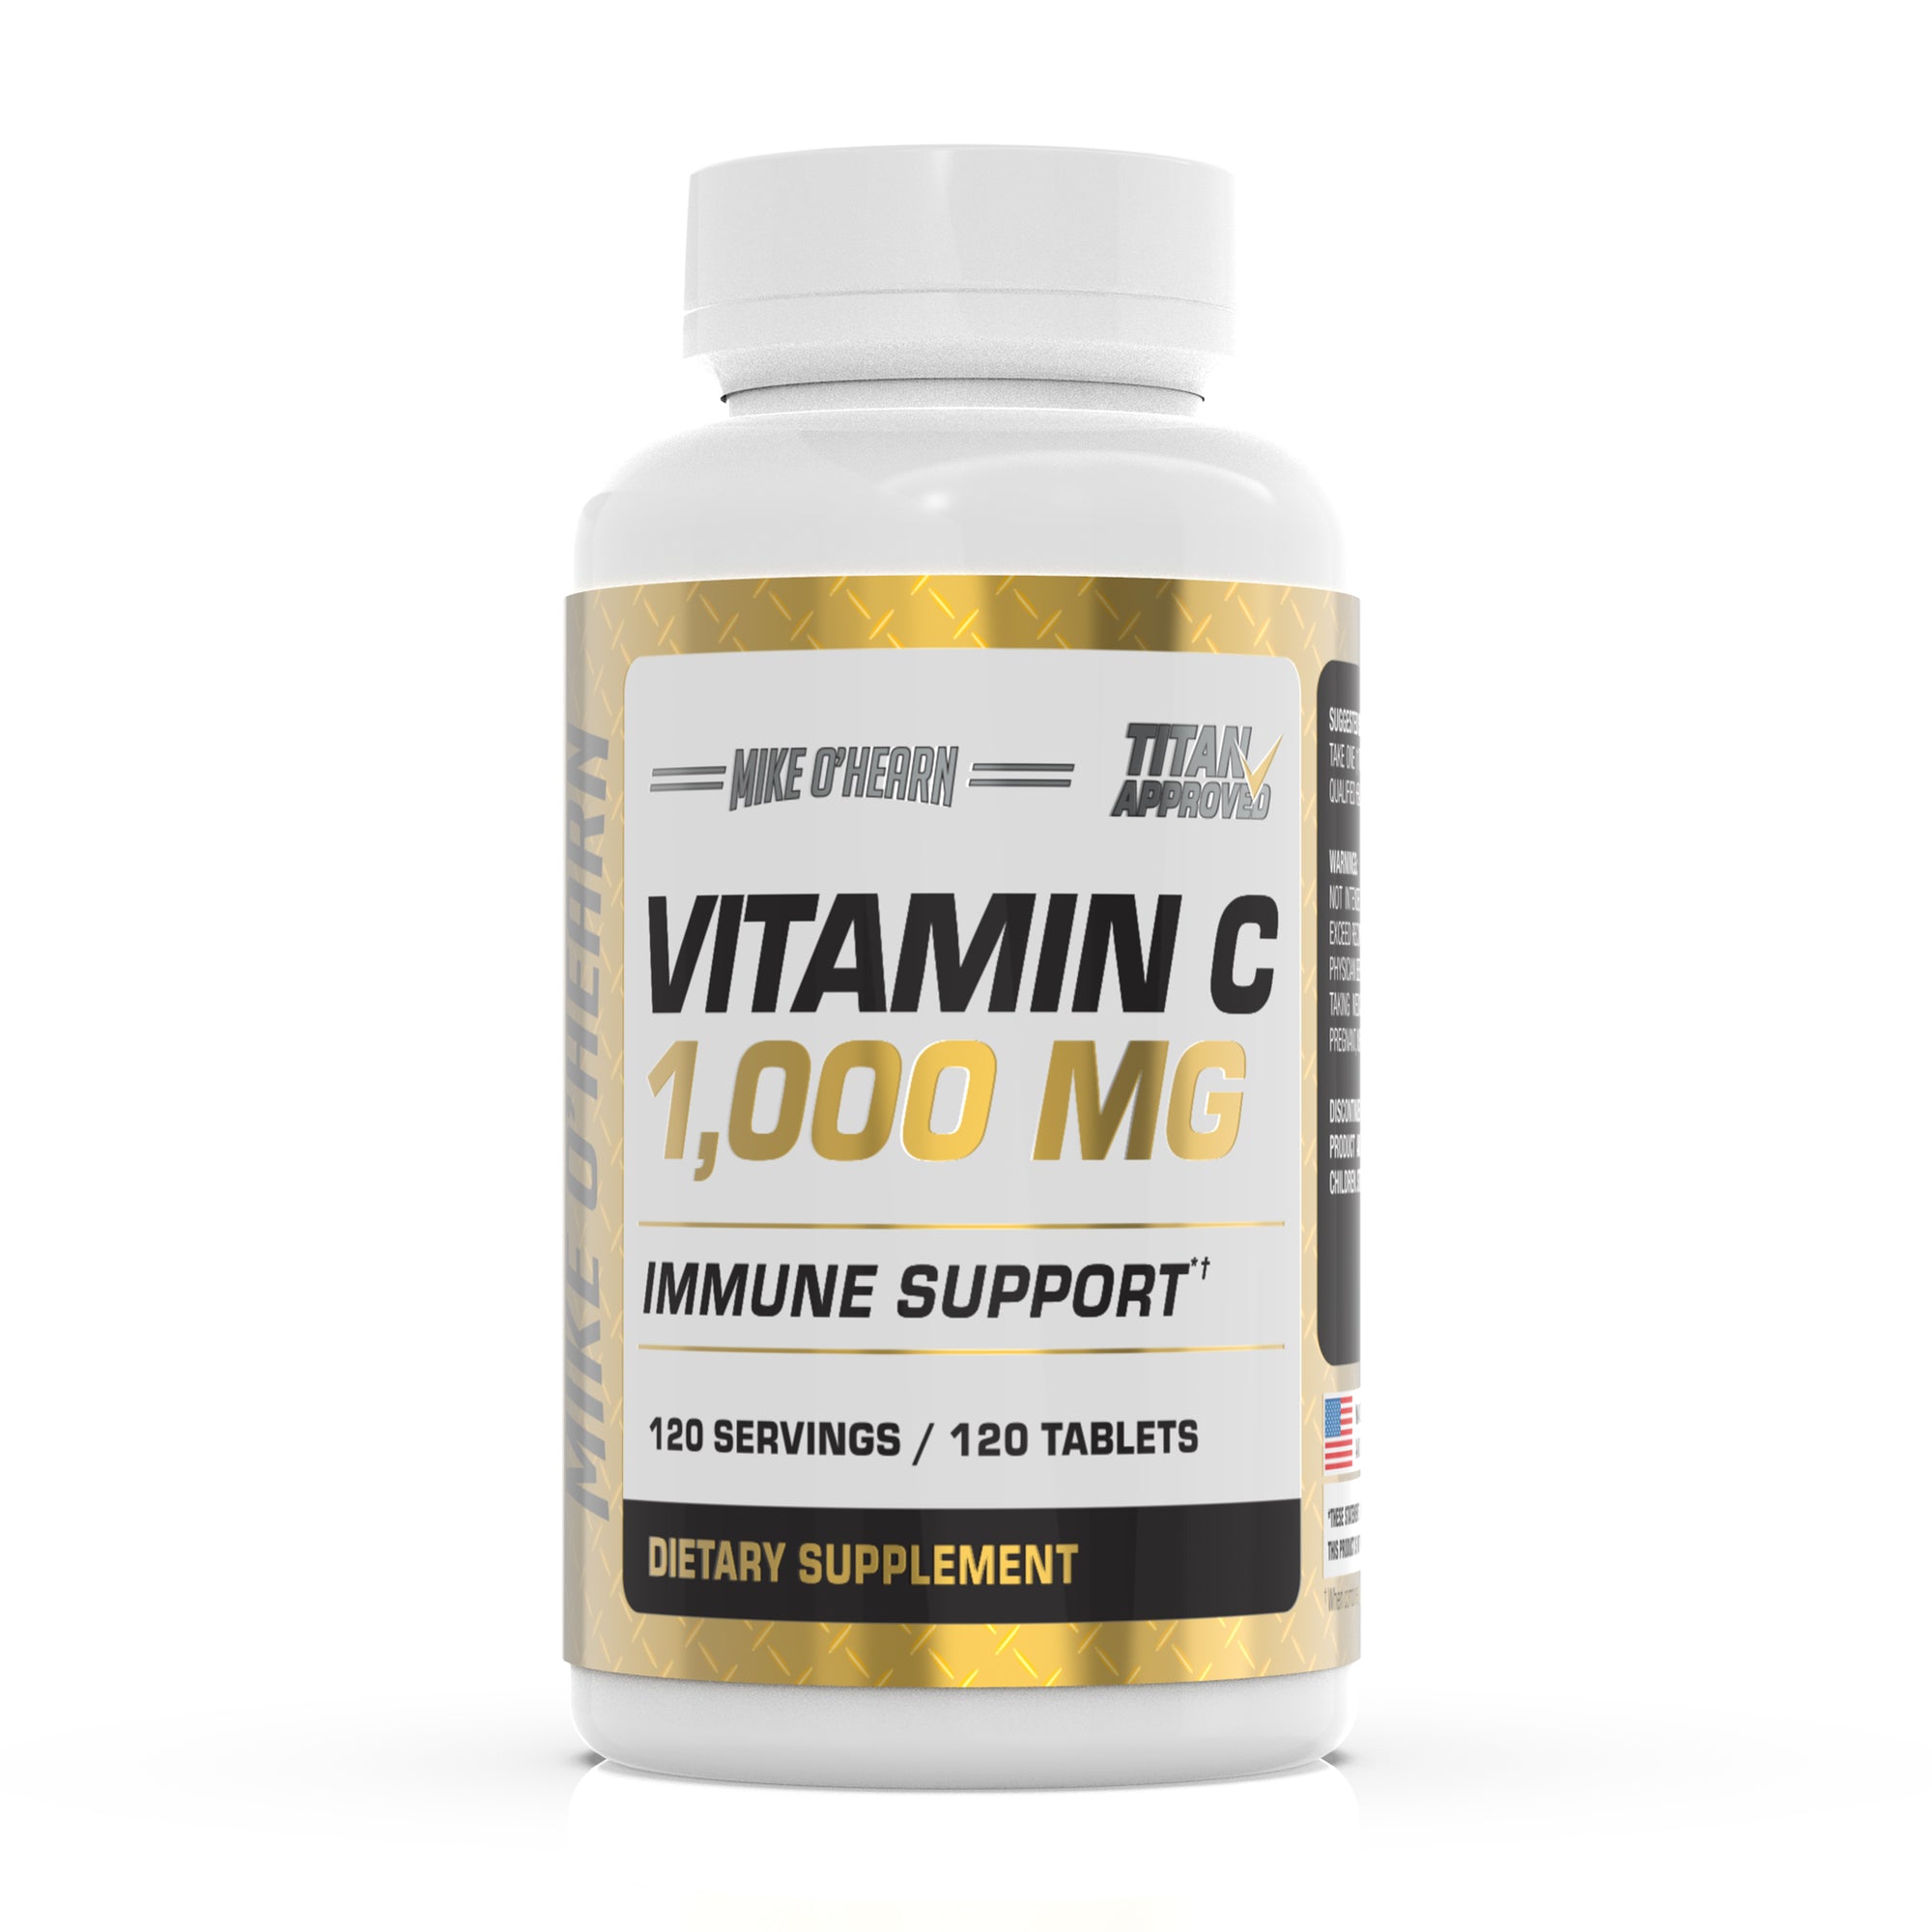 Vitamin C capsule bottle 1000 mg. Immune support. 120 servings / 120 tablets